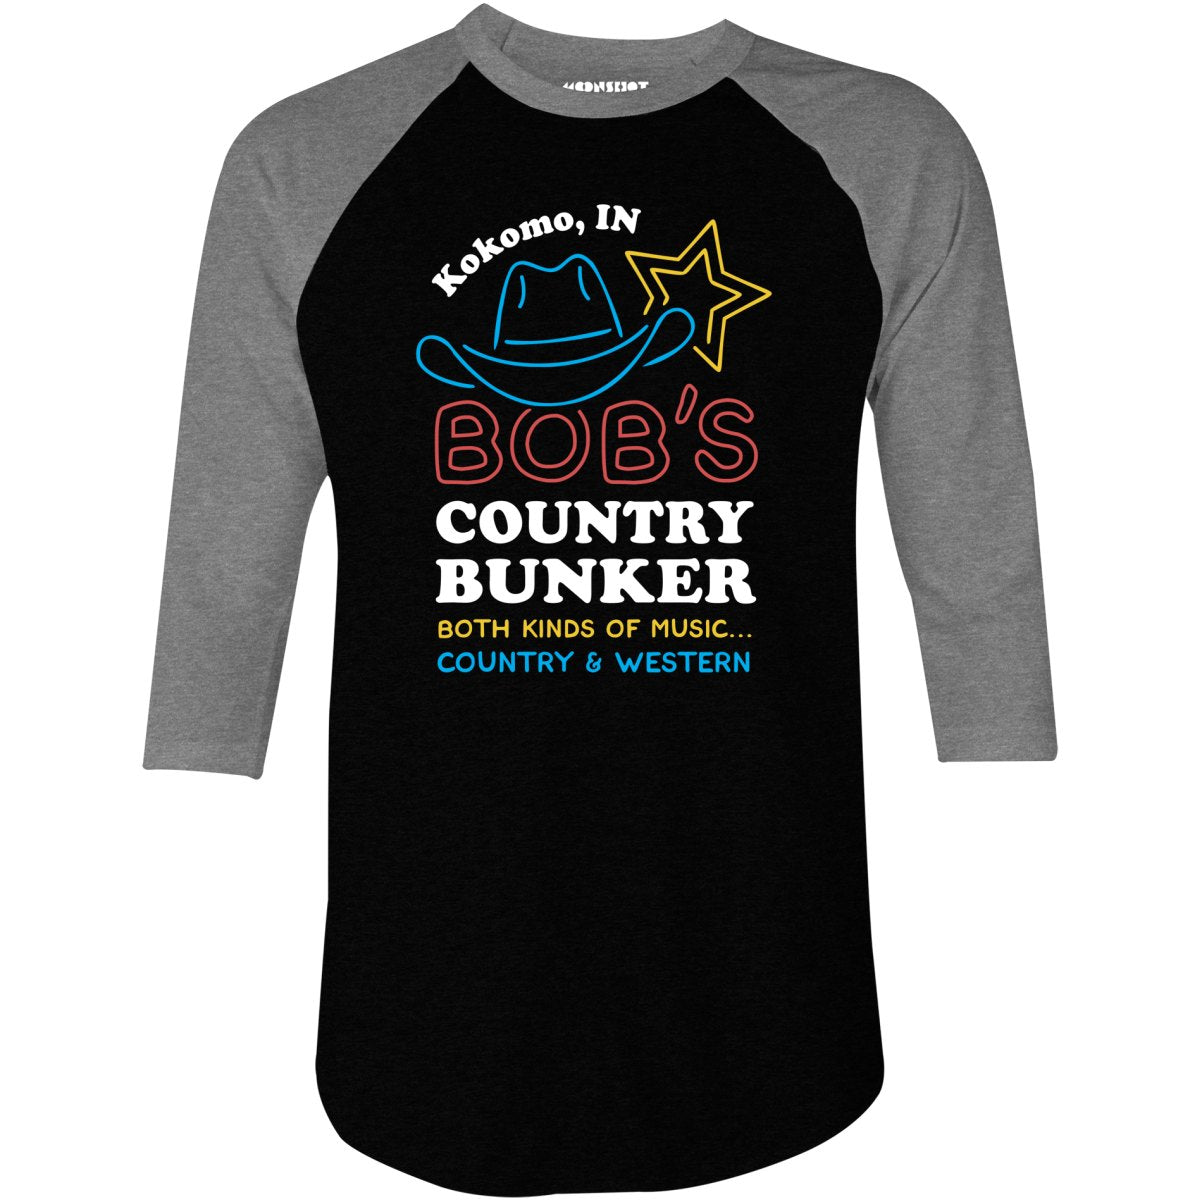 Bob's Country Bunker - 3/4 Sleeve Raglan T-Shirt